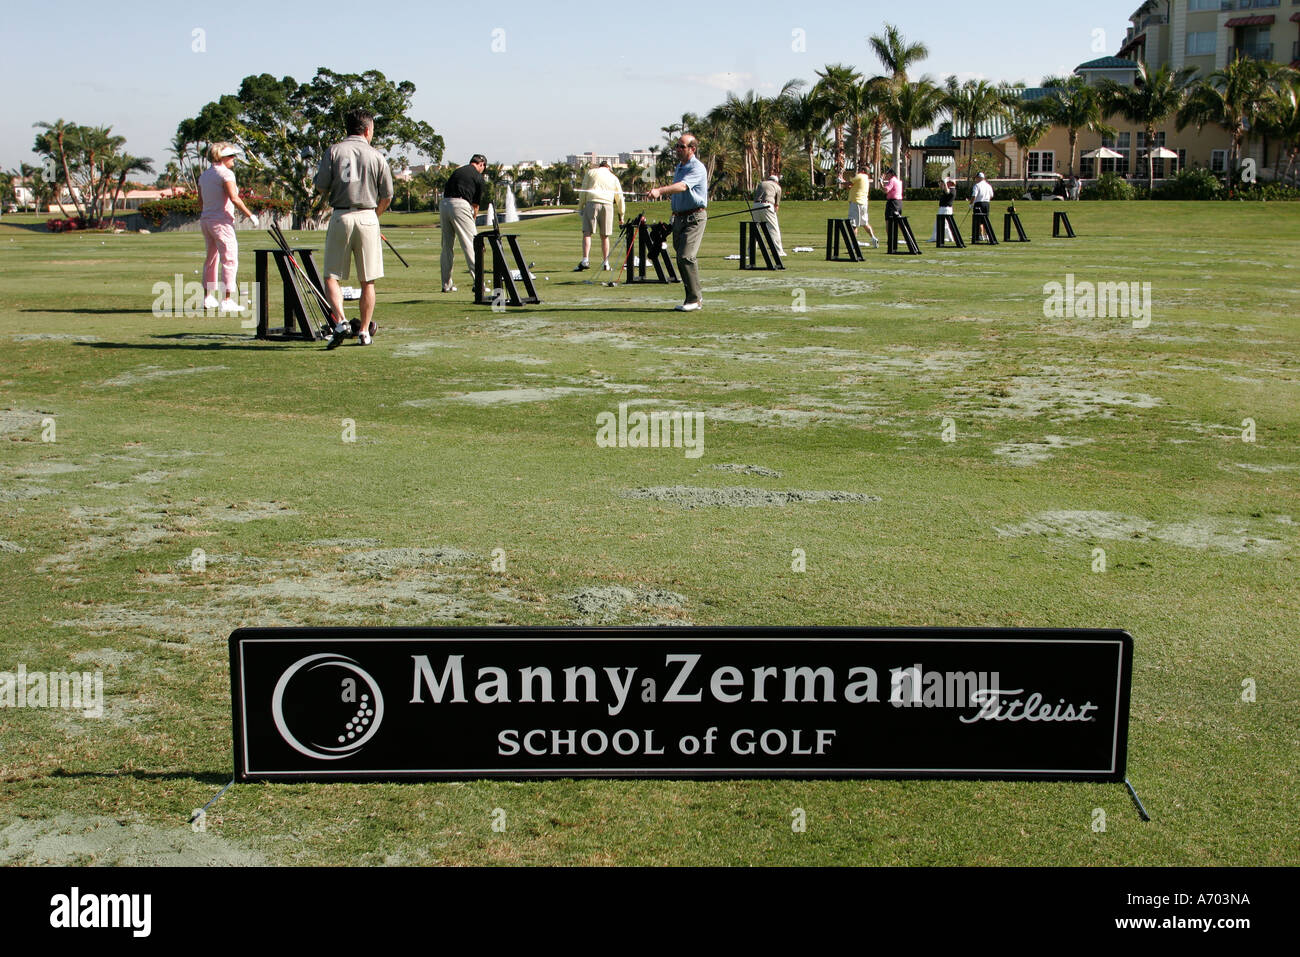 Hollywood Florida,Westin Diplomat Resort,Manny Zerman School of Golf,driving range,FL060210162 Stock Photo